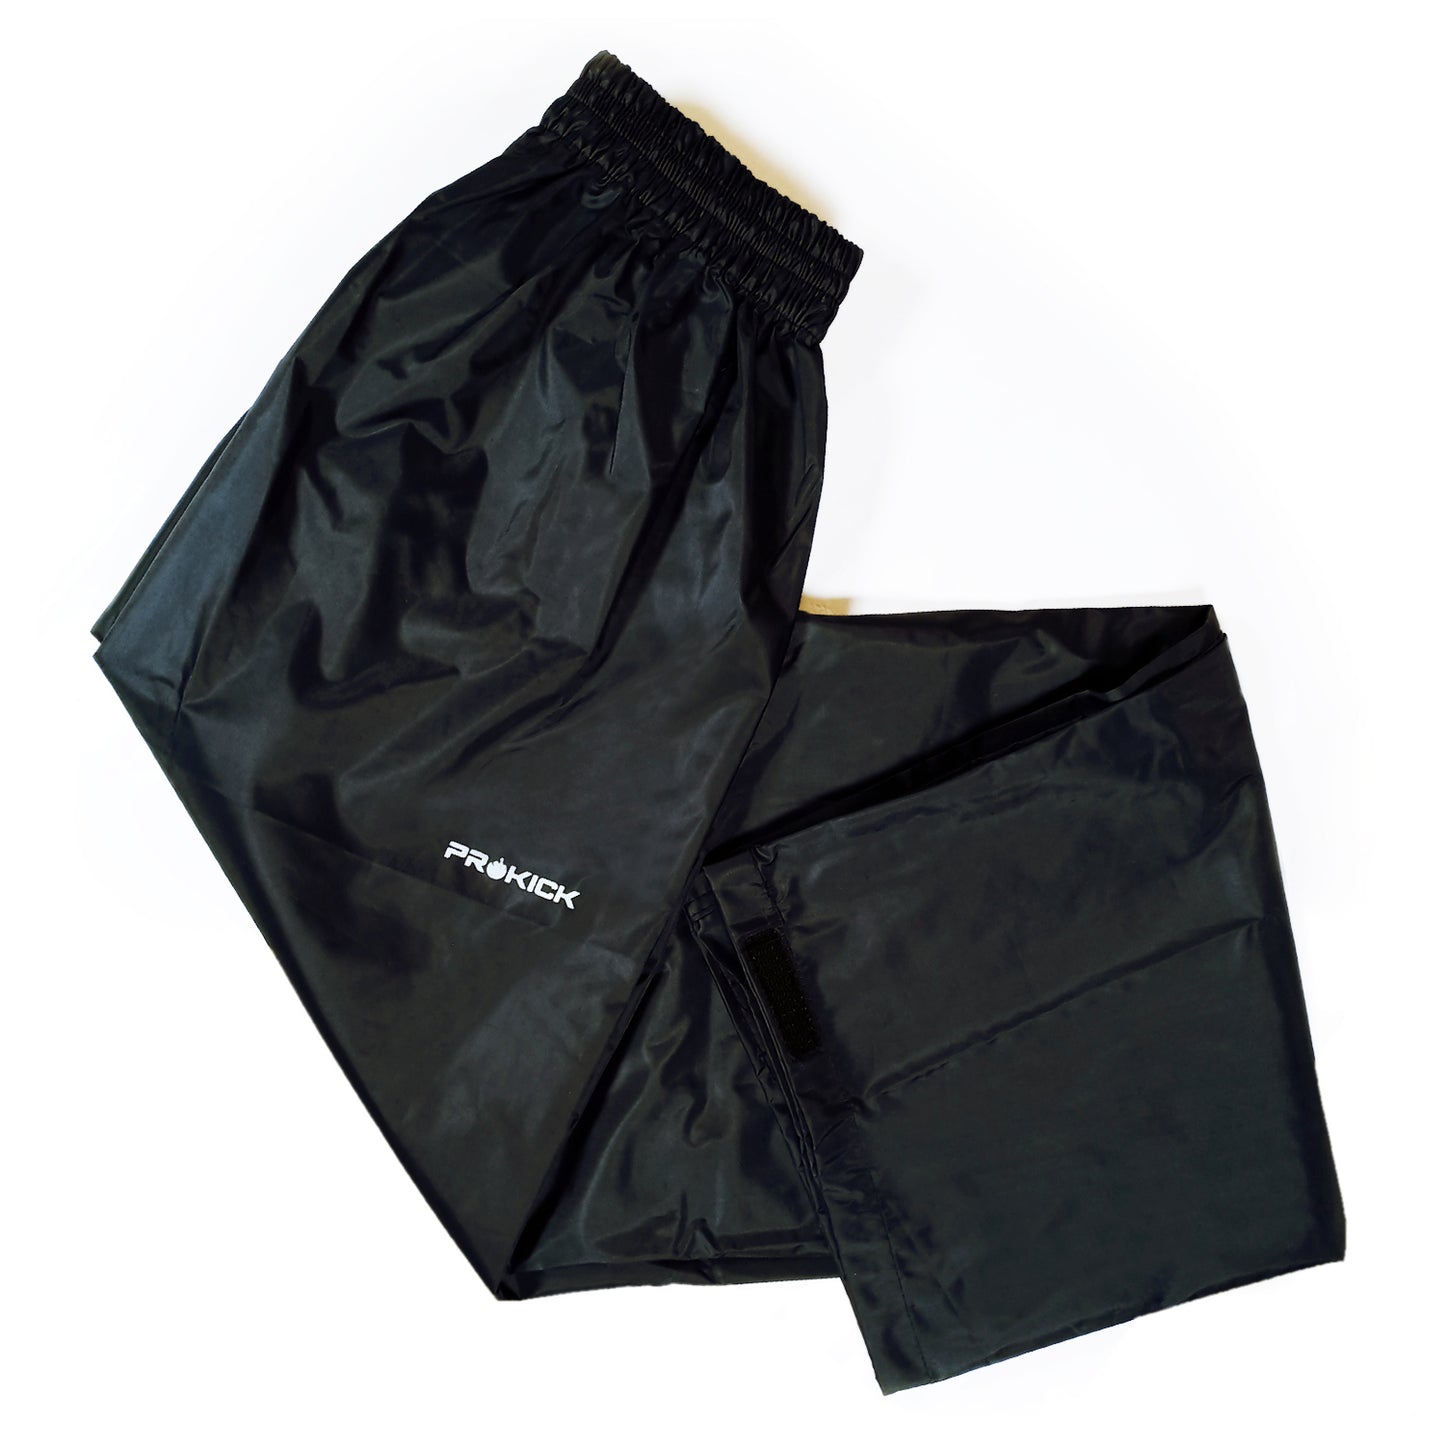 Prokick Waterproof Premium Rain Trouser/Pant - Best Price online Prokicksports.com